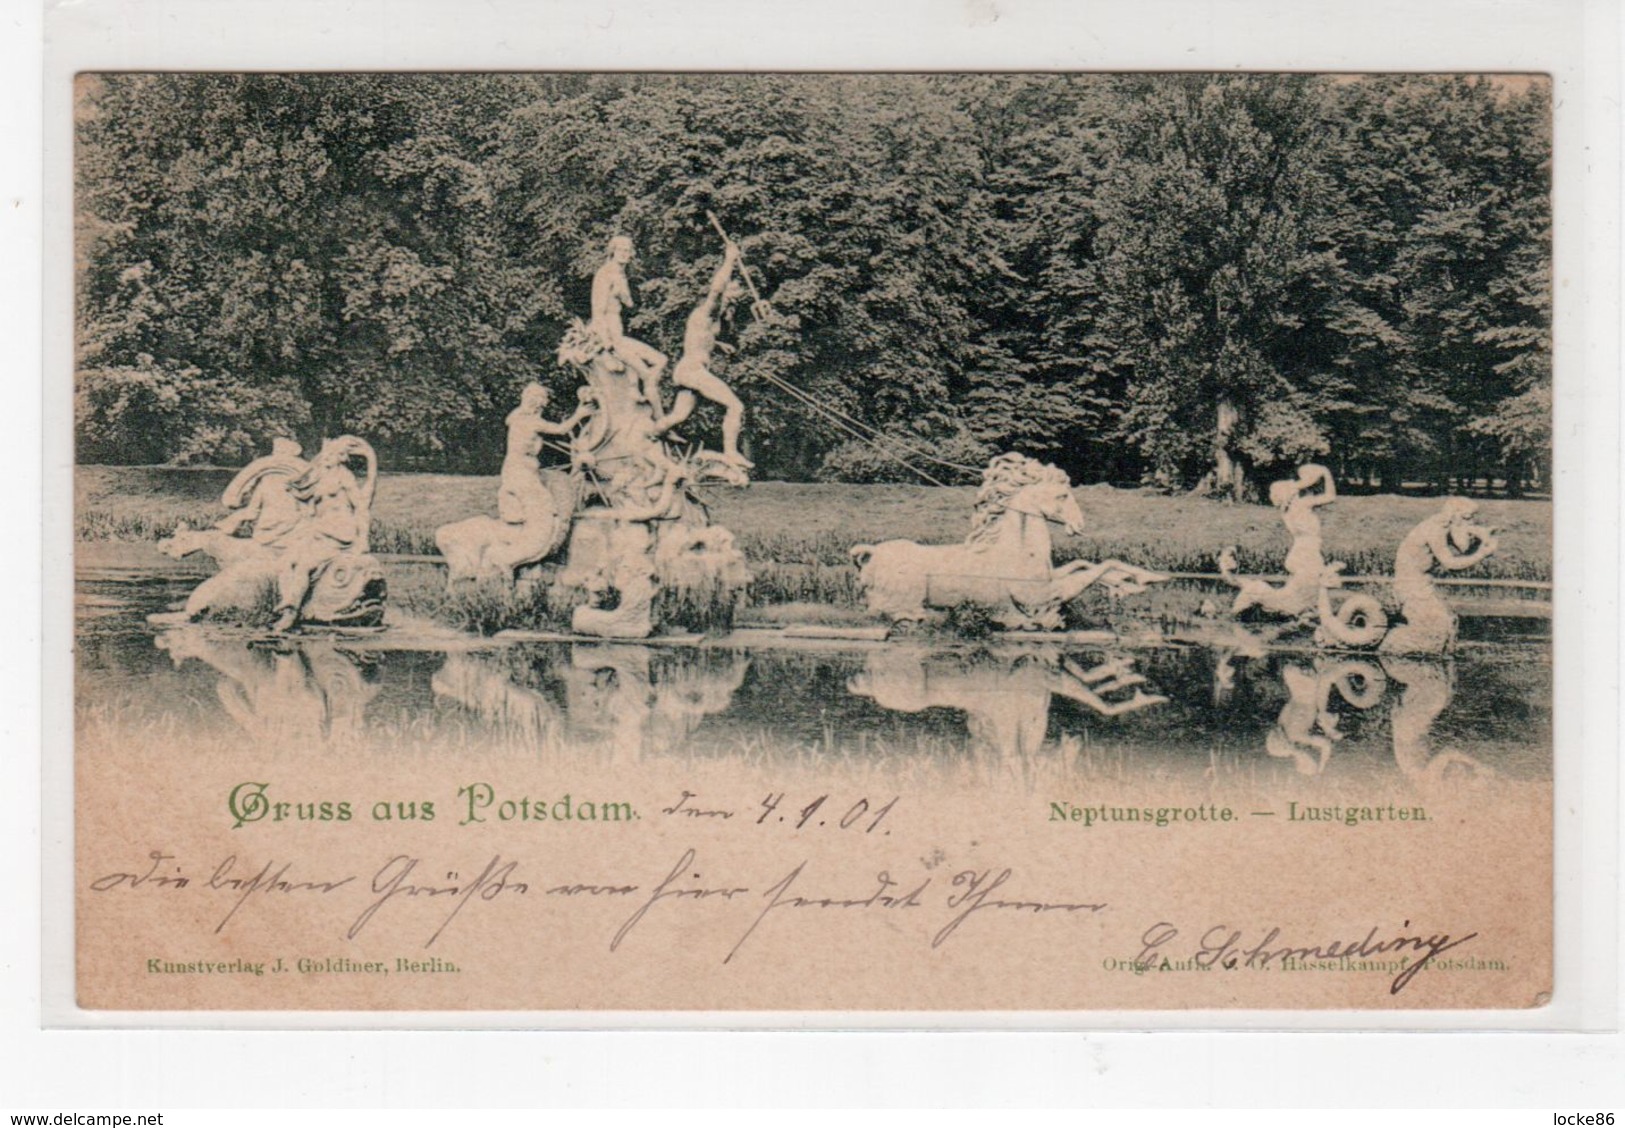 Gruss Aus Potsdam - Neptungrotte Lustgarten, 1901 - Potsdam